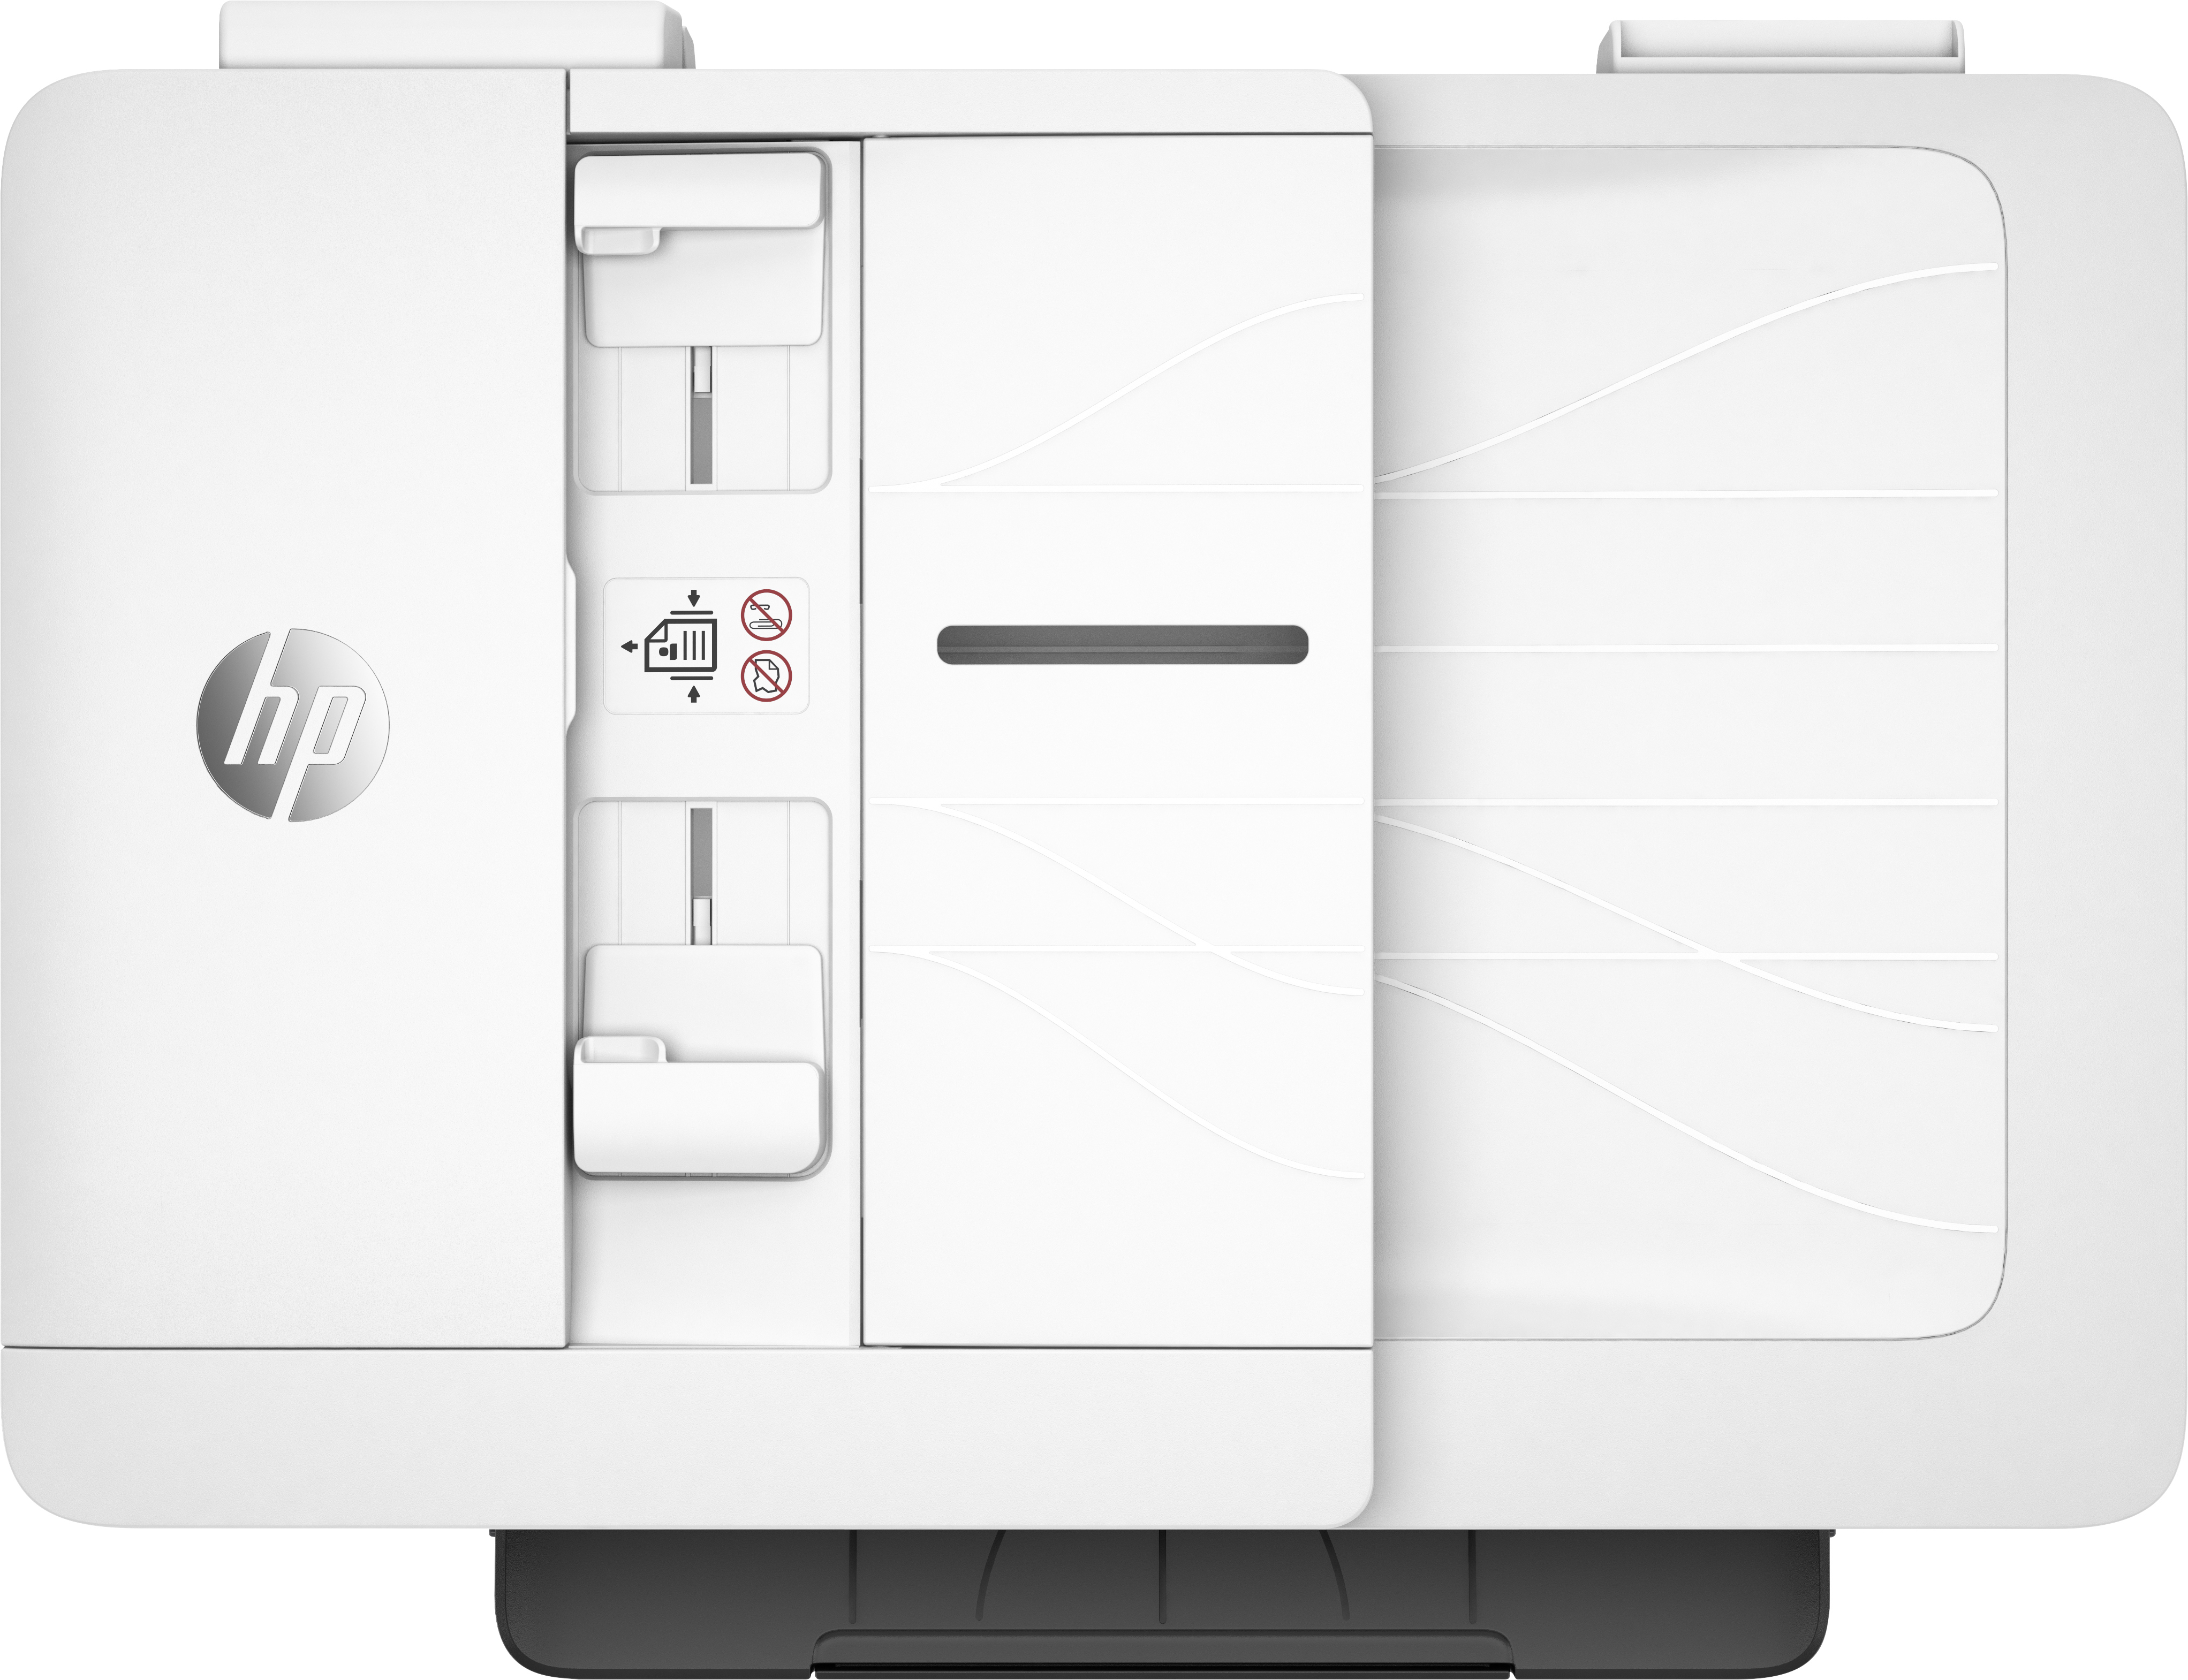 HP OfficeJet Pro 7740 HP Tintenstrahldruck 4-in-1 WLAN Großformat-Multifunktionsdrucker Netzwerkfähig